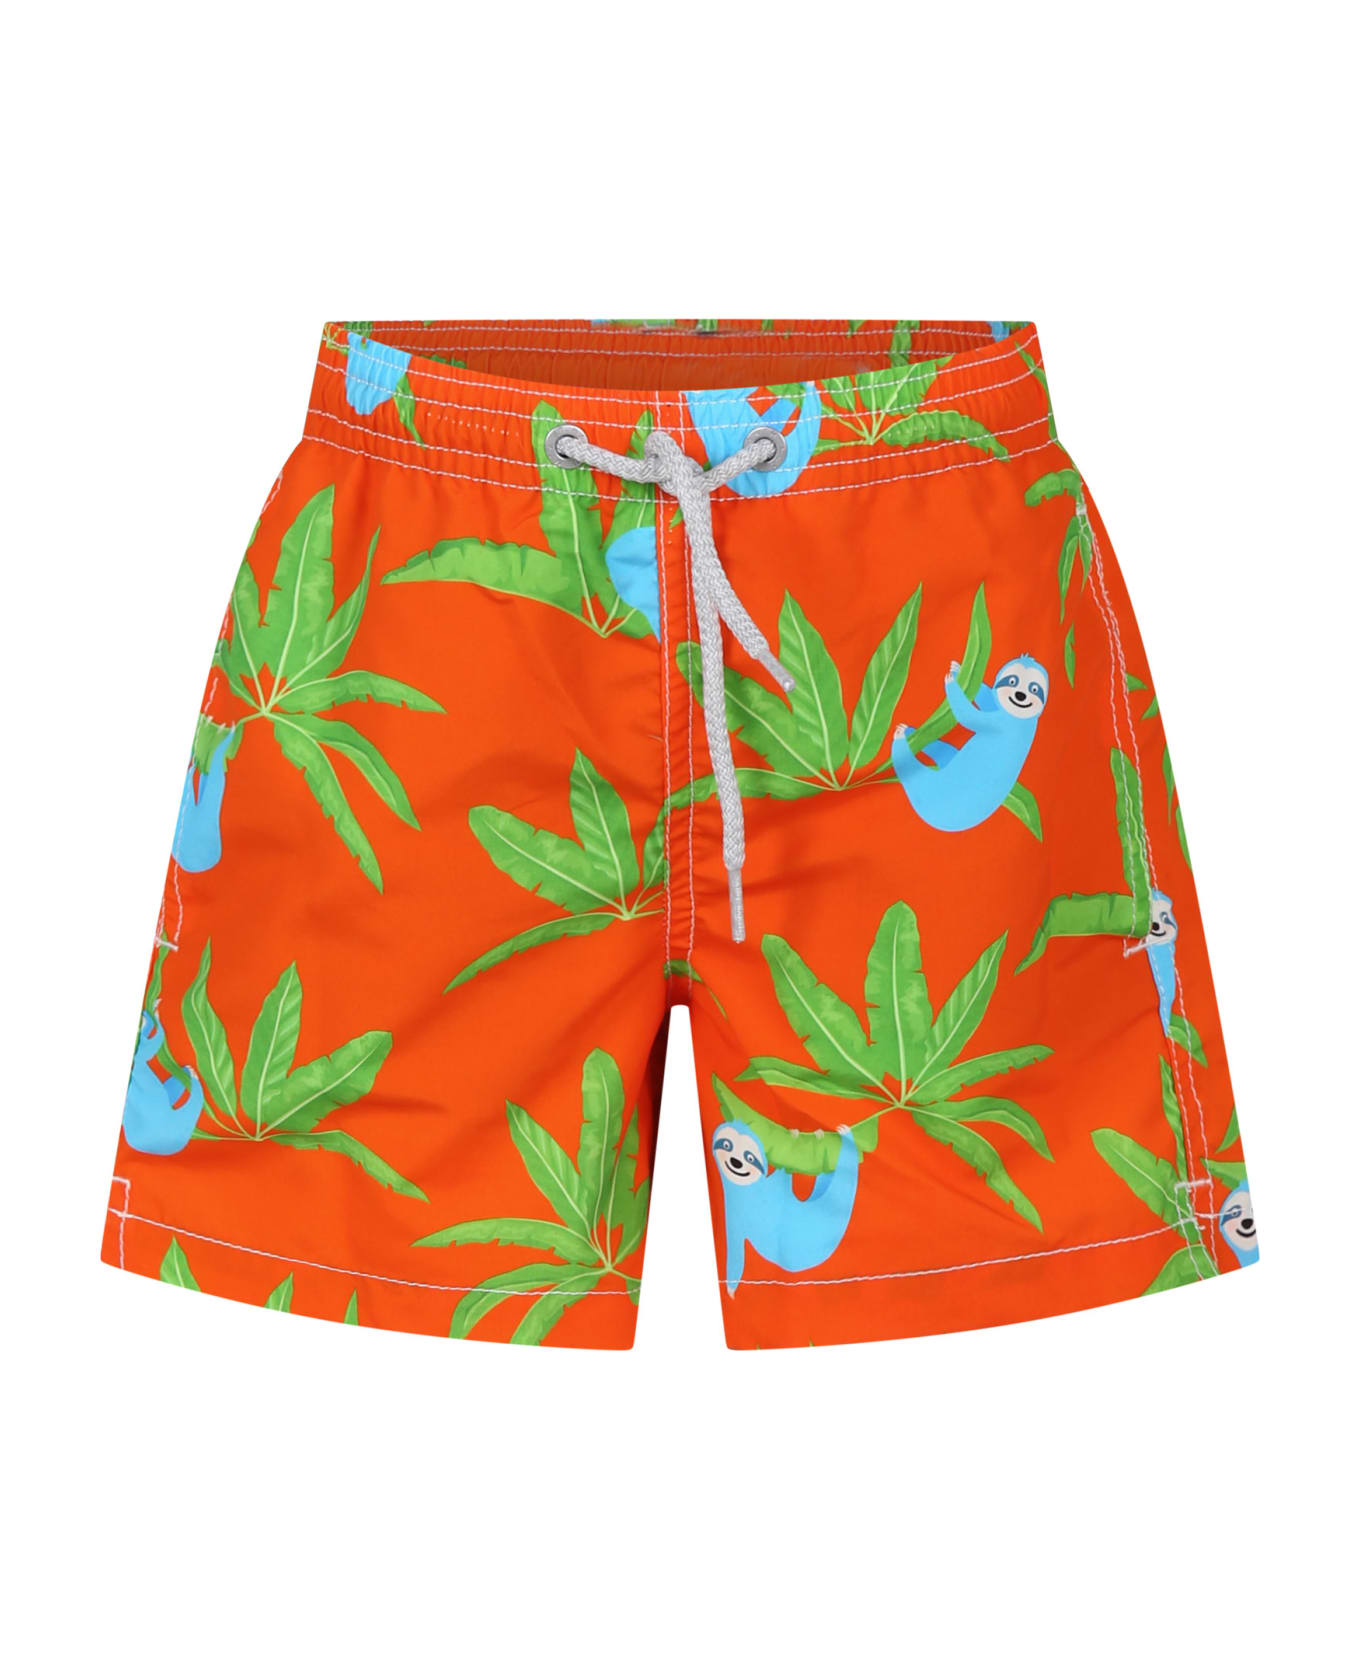 MC2 Saint Barth Orange Swim Shorts For Boy With Sloth Print - Orange